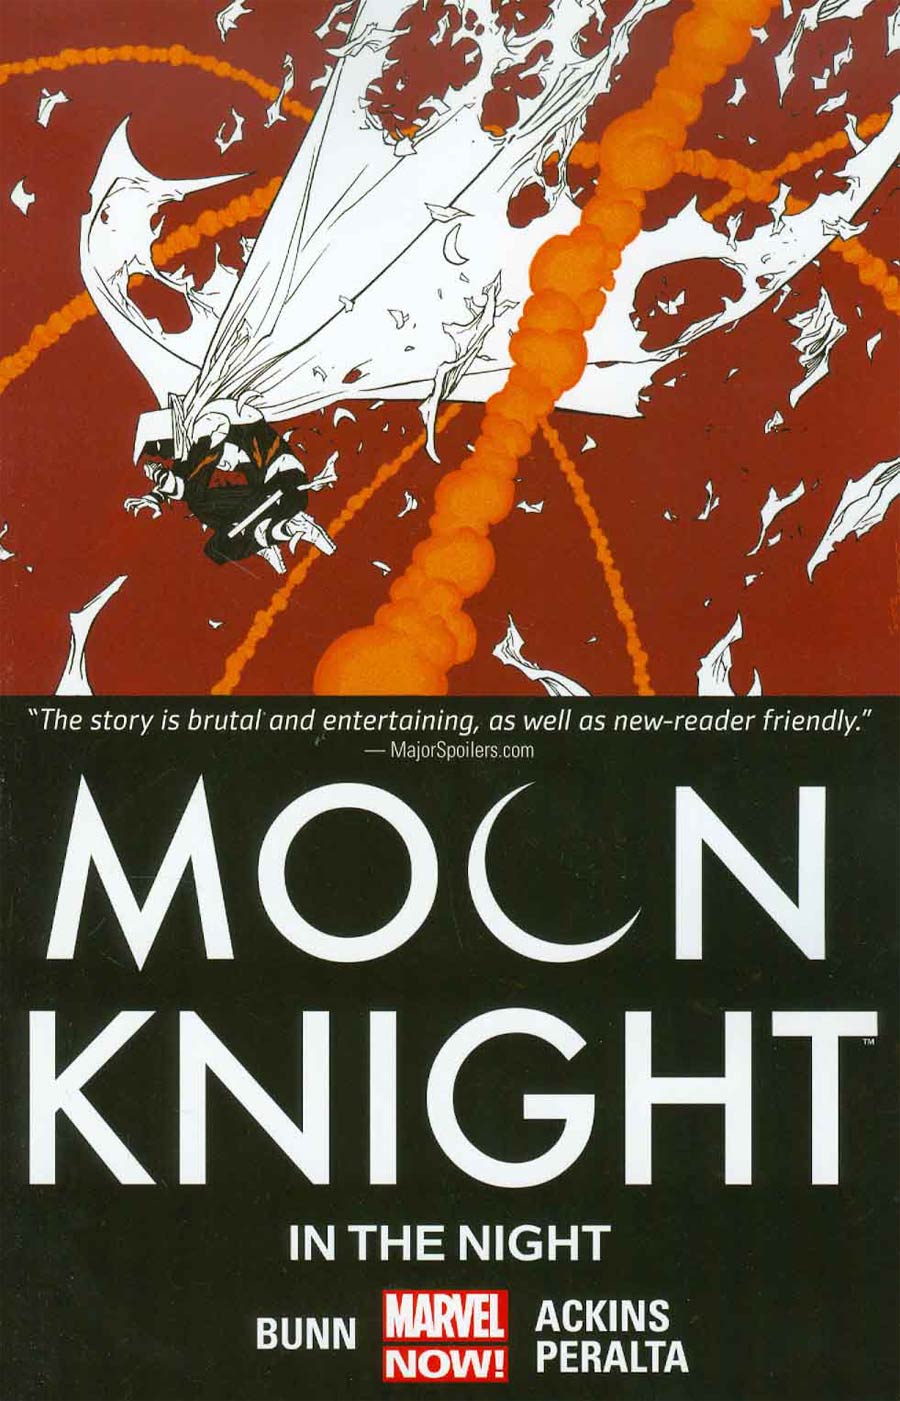 Moon Knight (2014) Vol 3 In The Night TP